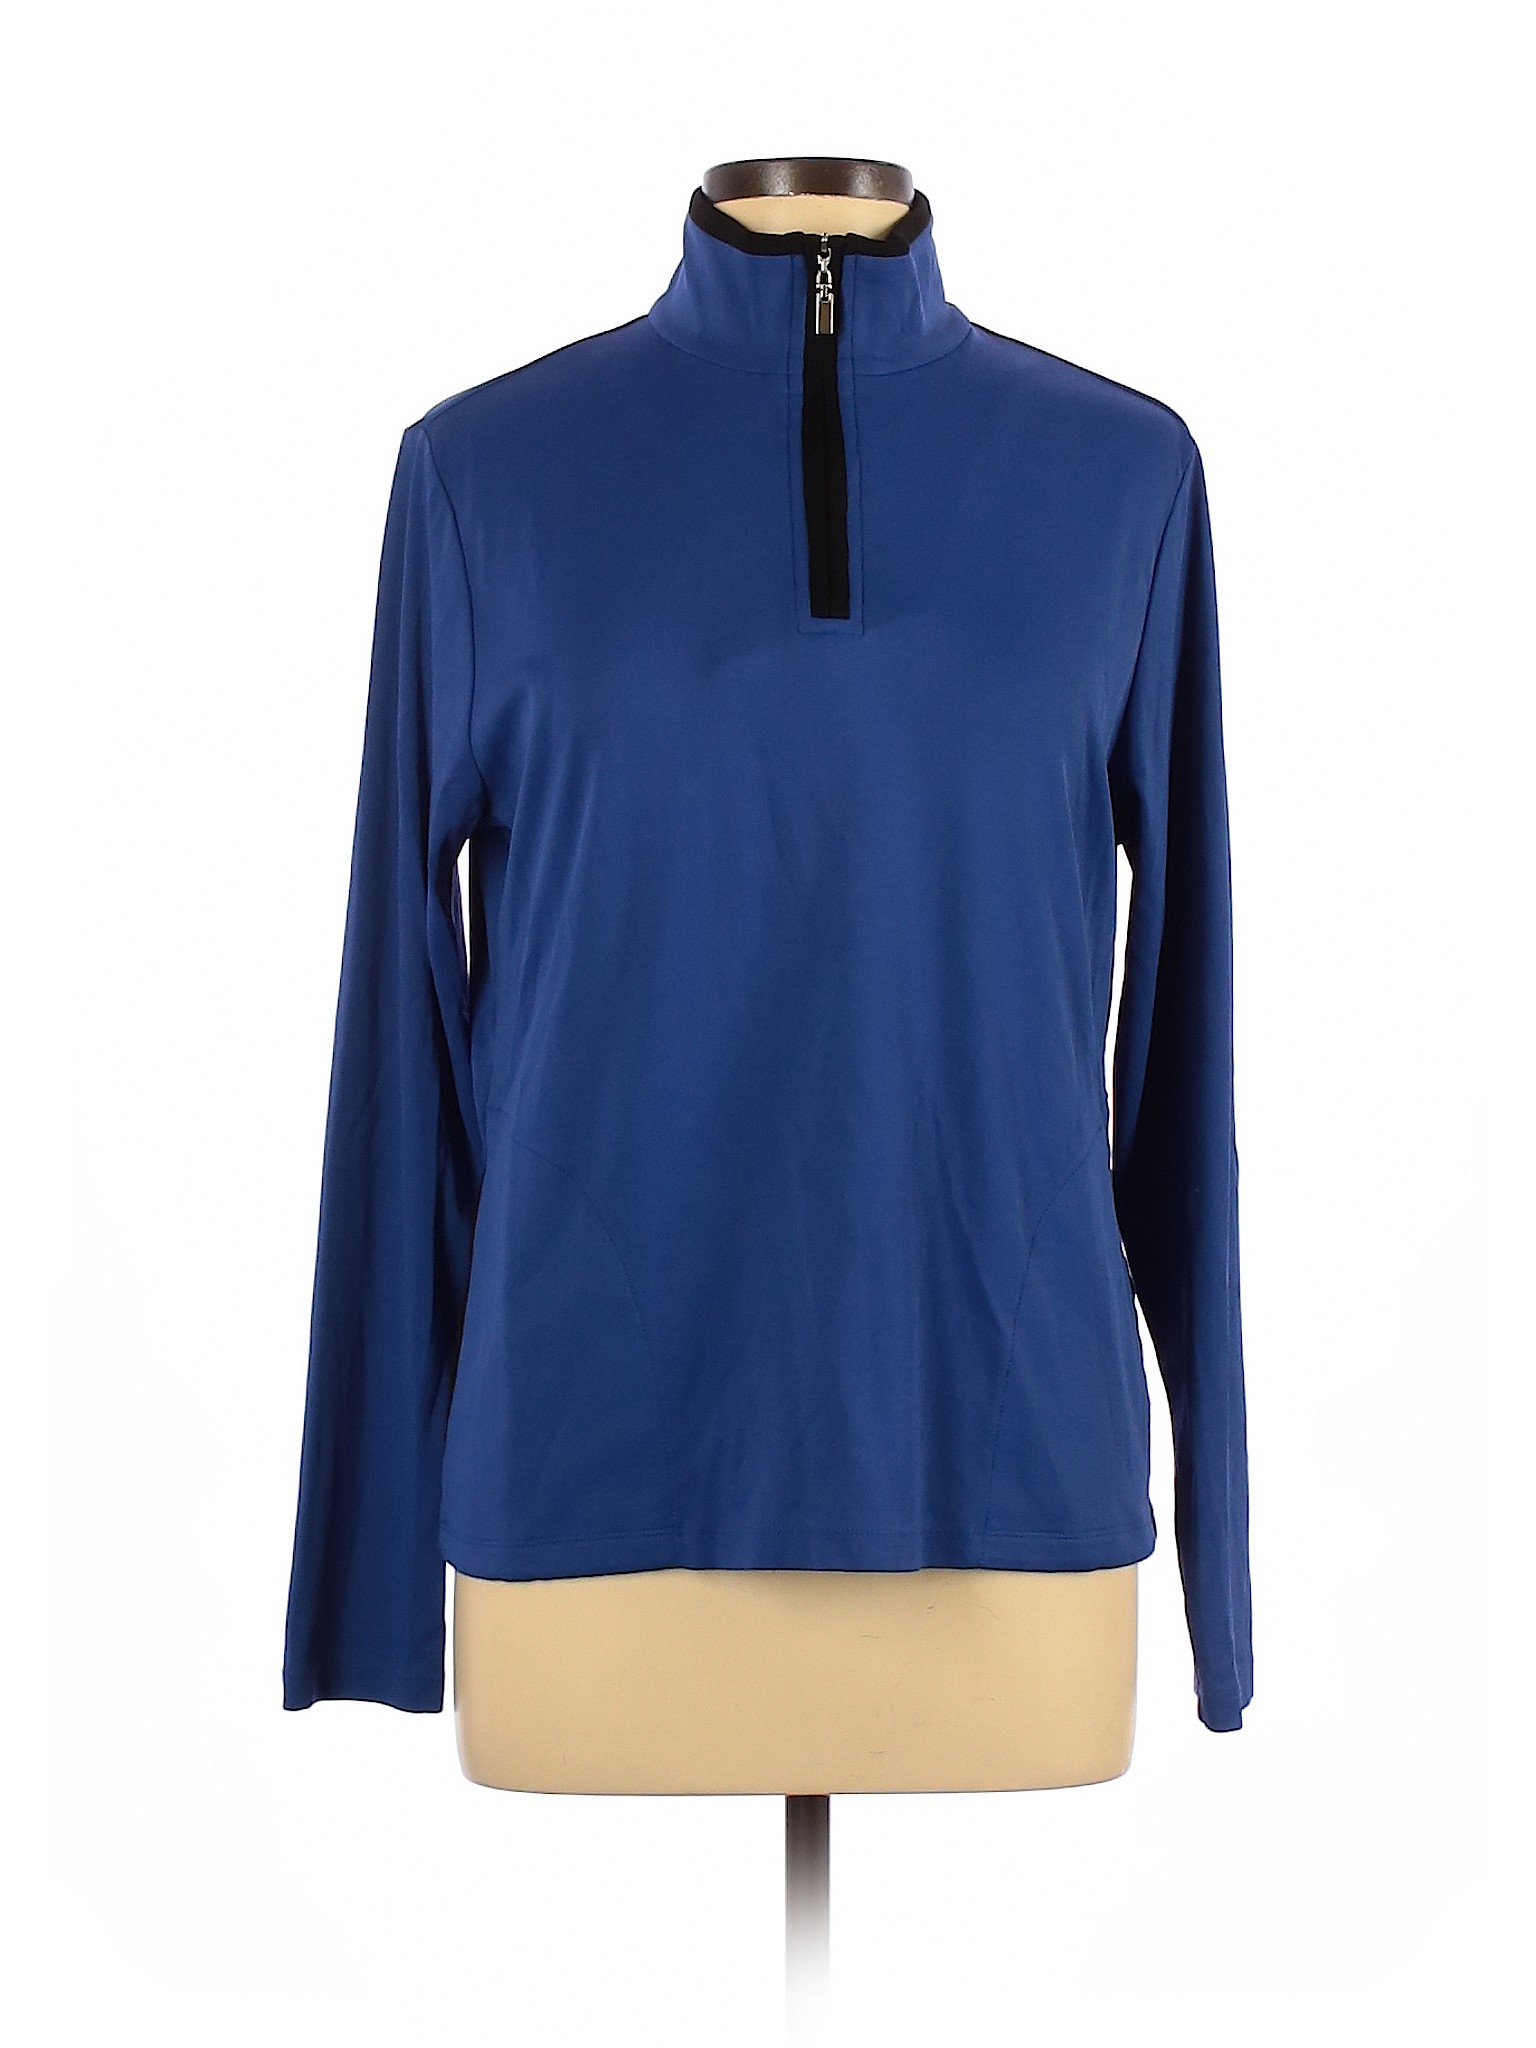 Talbots Women Blue Track Jacket L | eBay